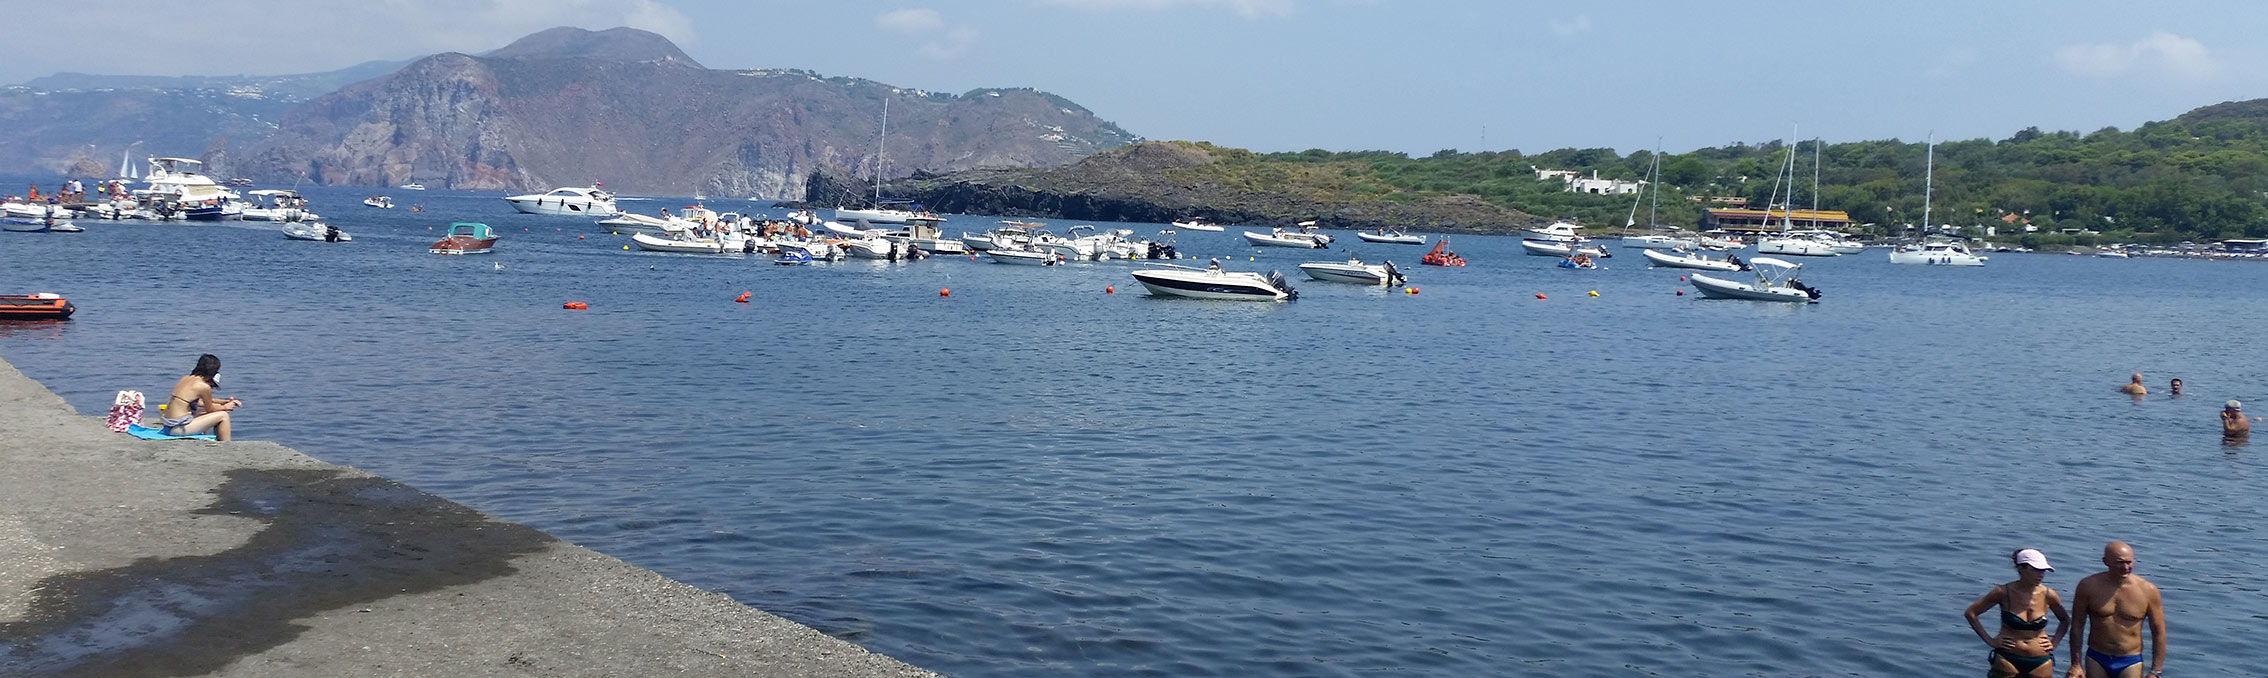 Vulcano rental boats